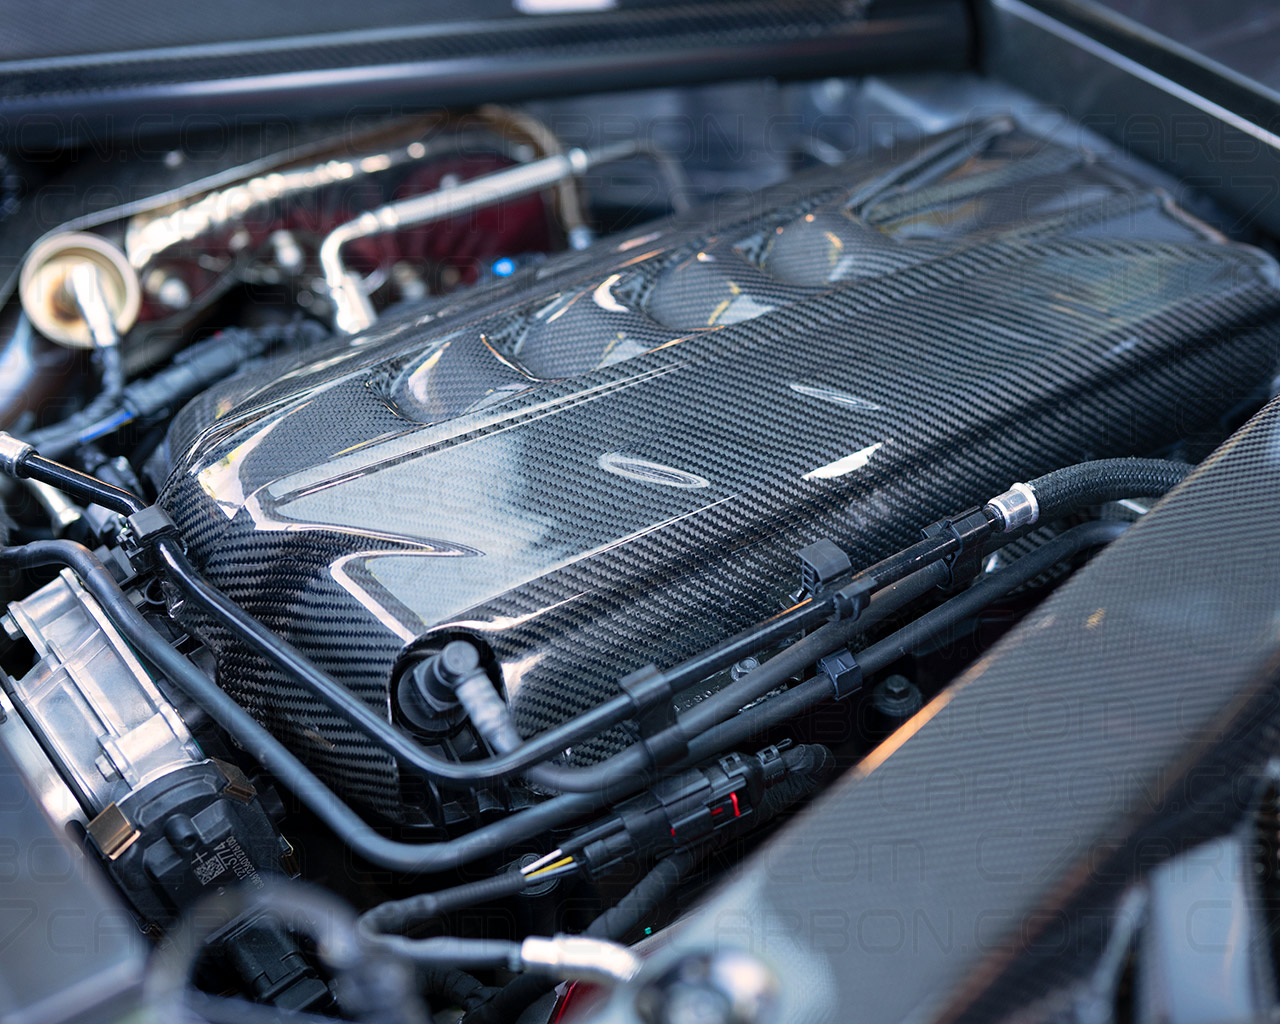 C8 Corvette, Stingray Carbon Fiber Engine Cover for LT2 Engine